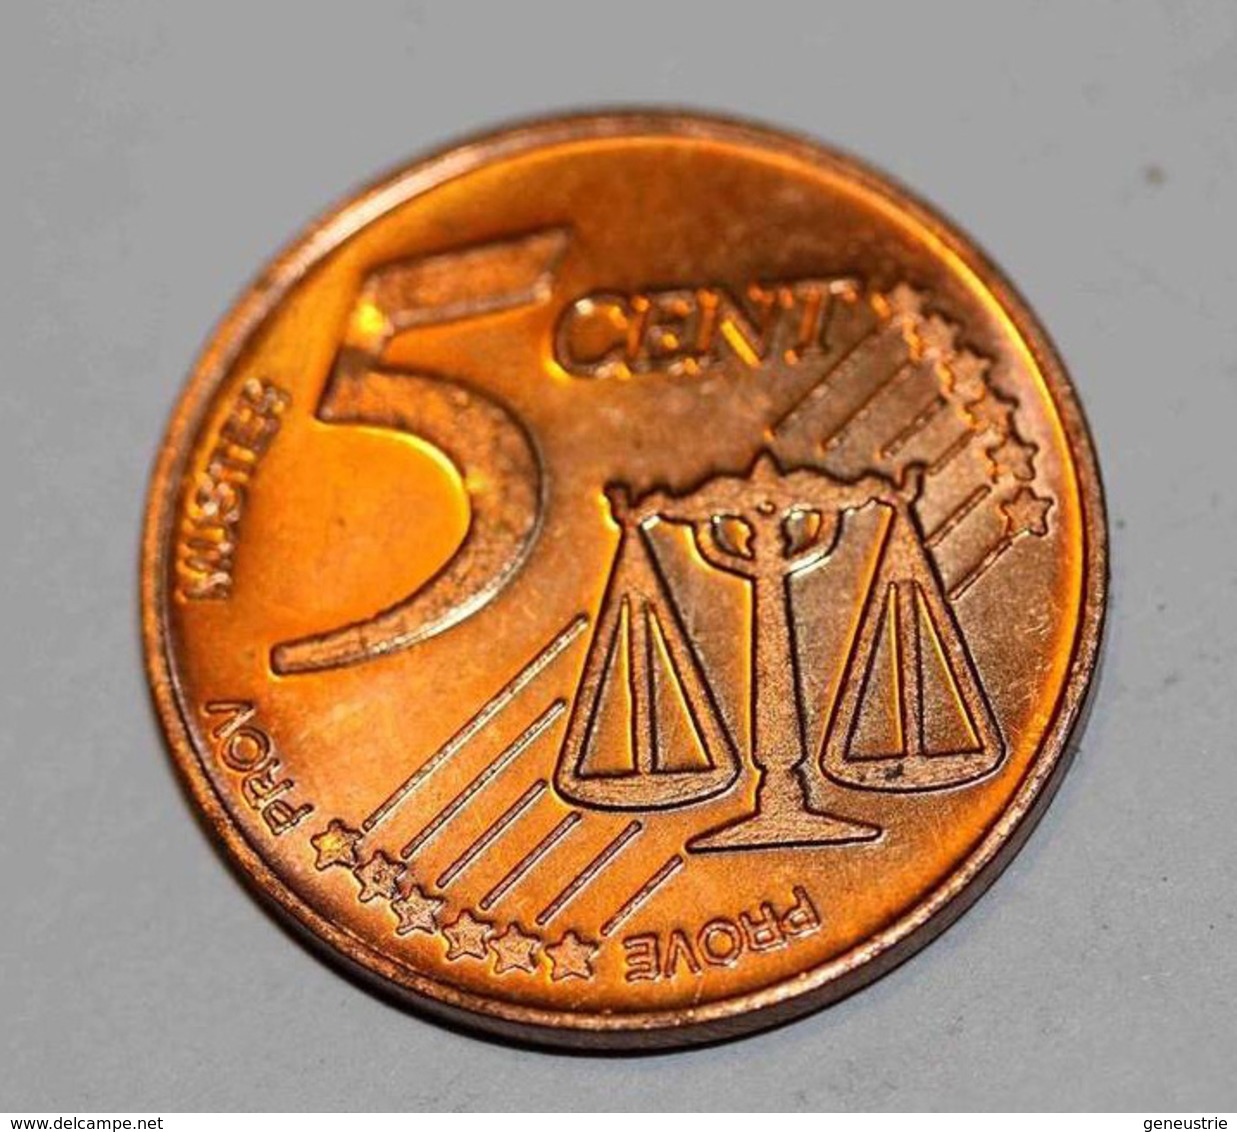 Wales - Pays De Galles 2004 BU EURO PATTERN EURO ESSAI 5 Cents - 5 Euro Cent - Pruebas Privadas